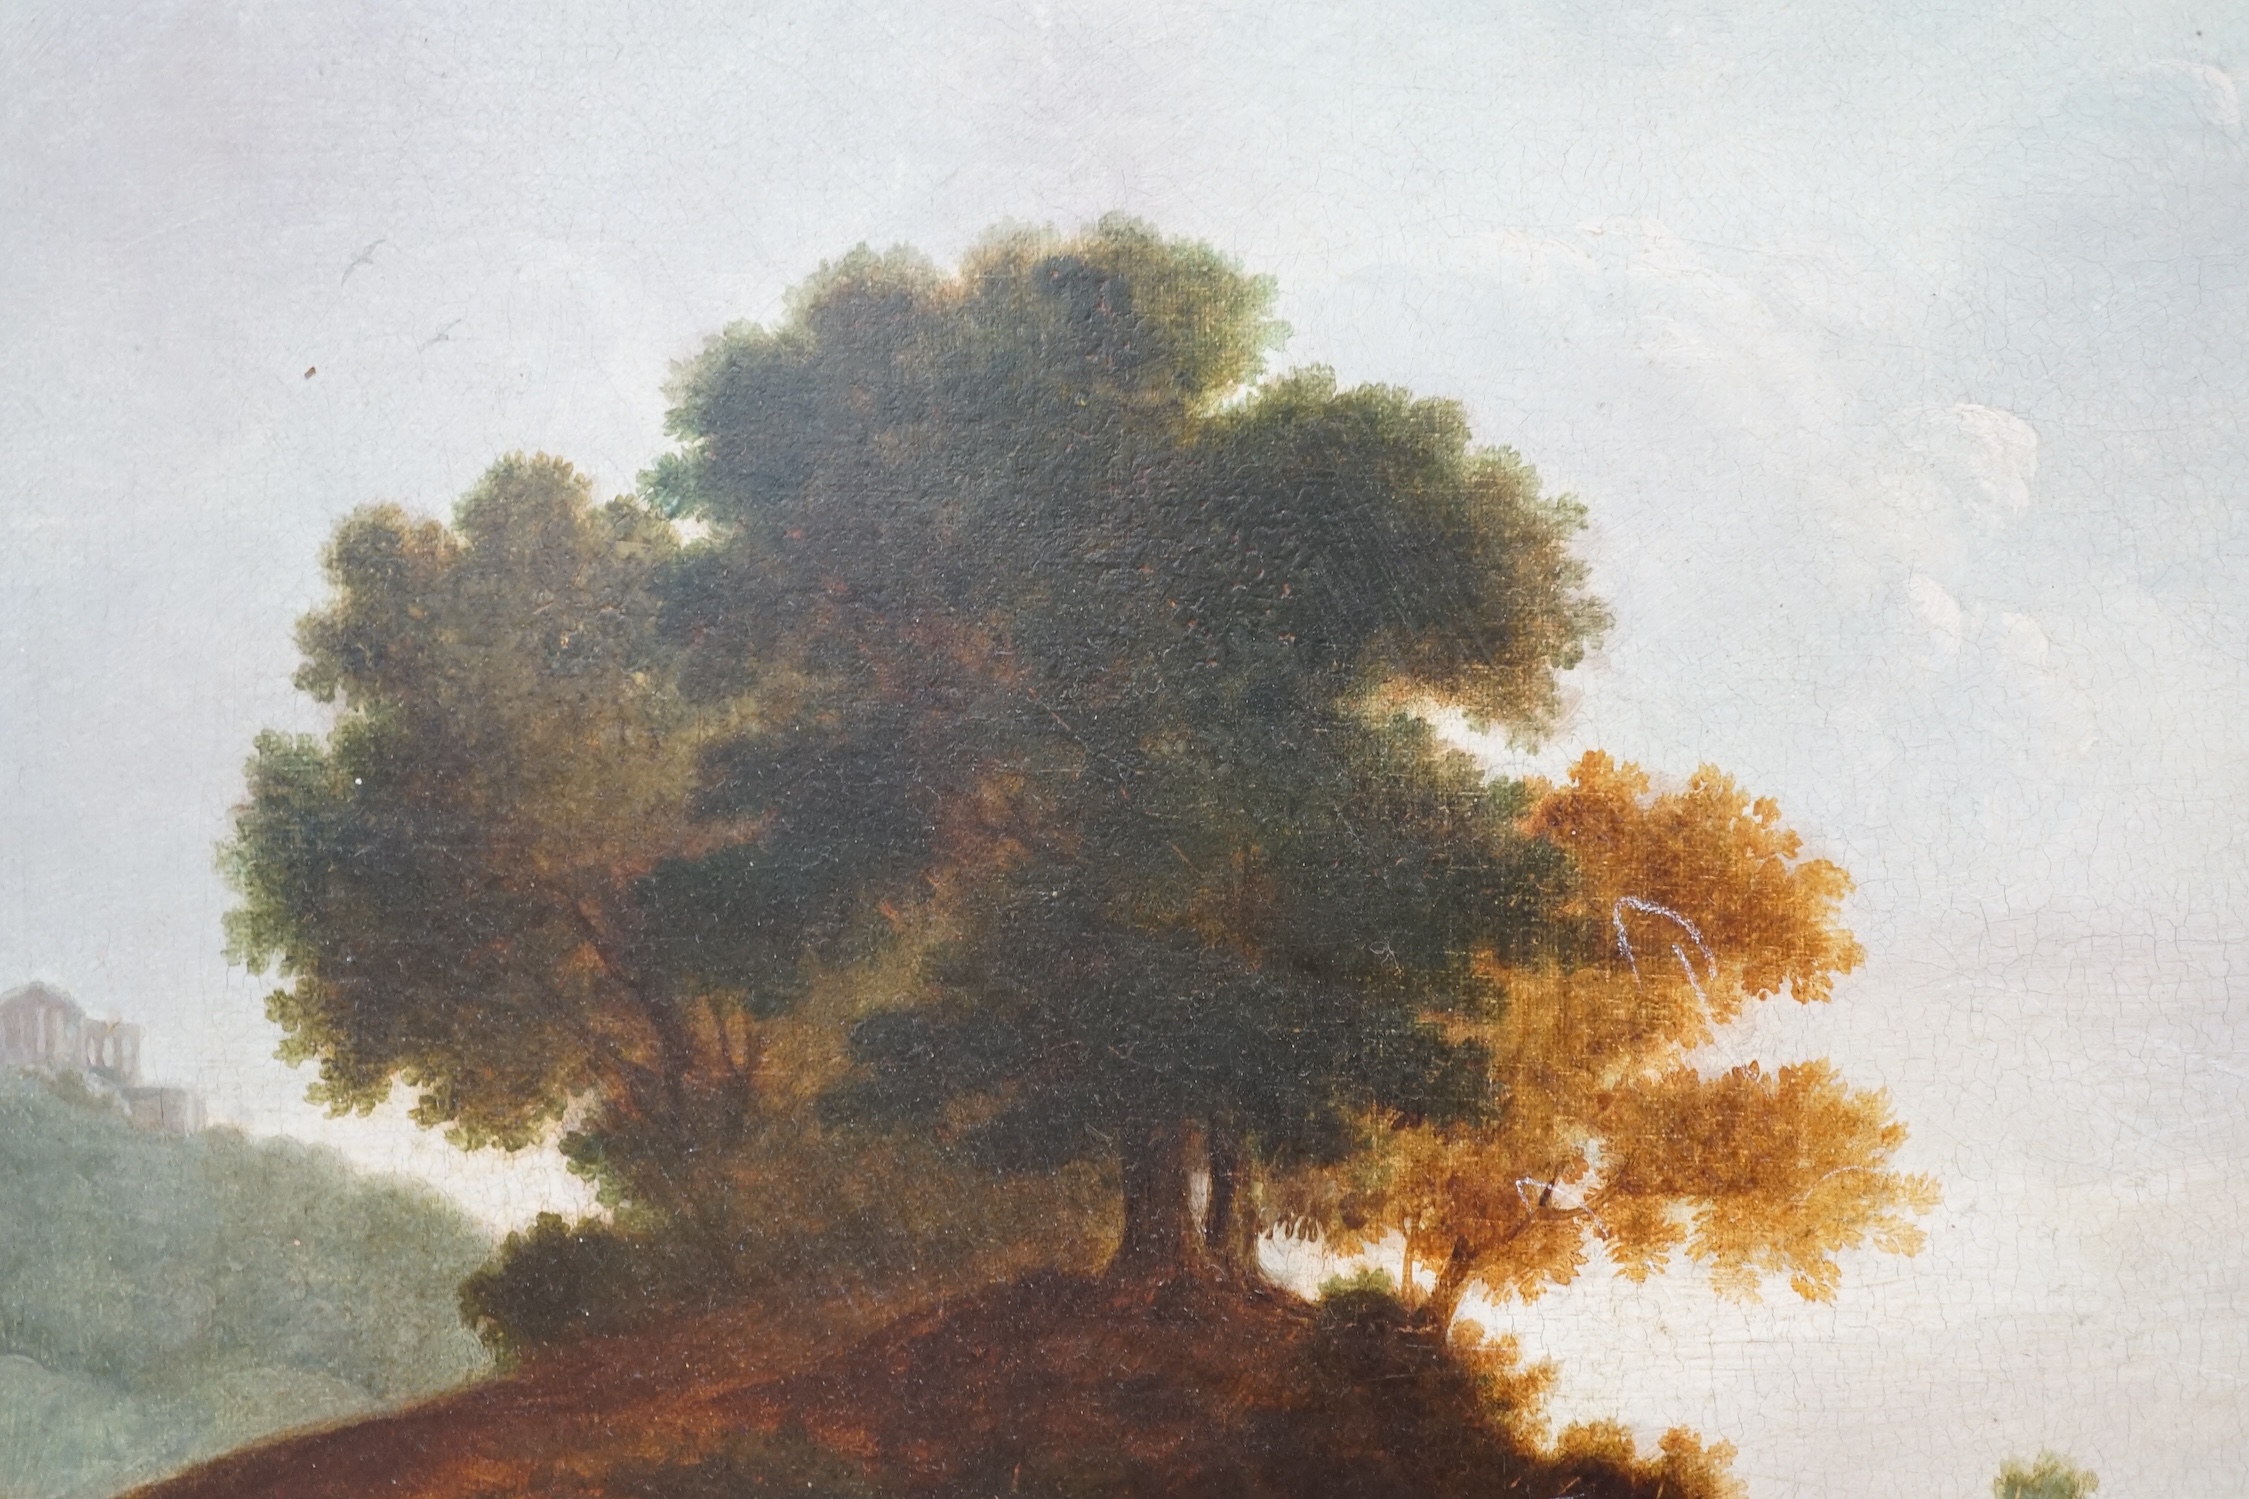 19th century, English school, oil on canvas, Pastoral landscape, 43 x 48cm, gilt frame. Condition - fair, relined